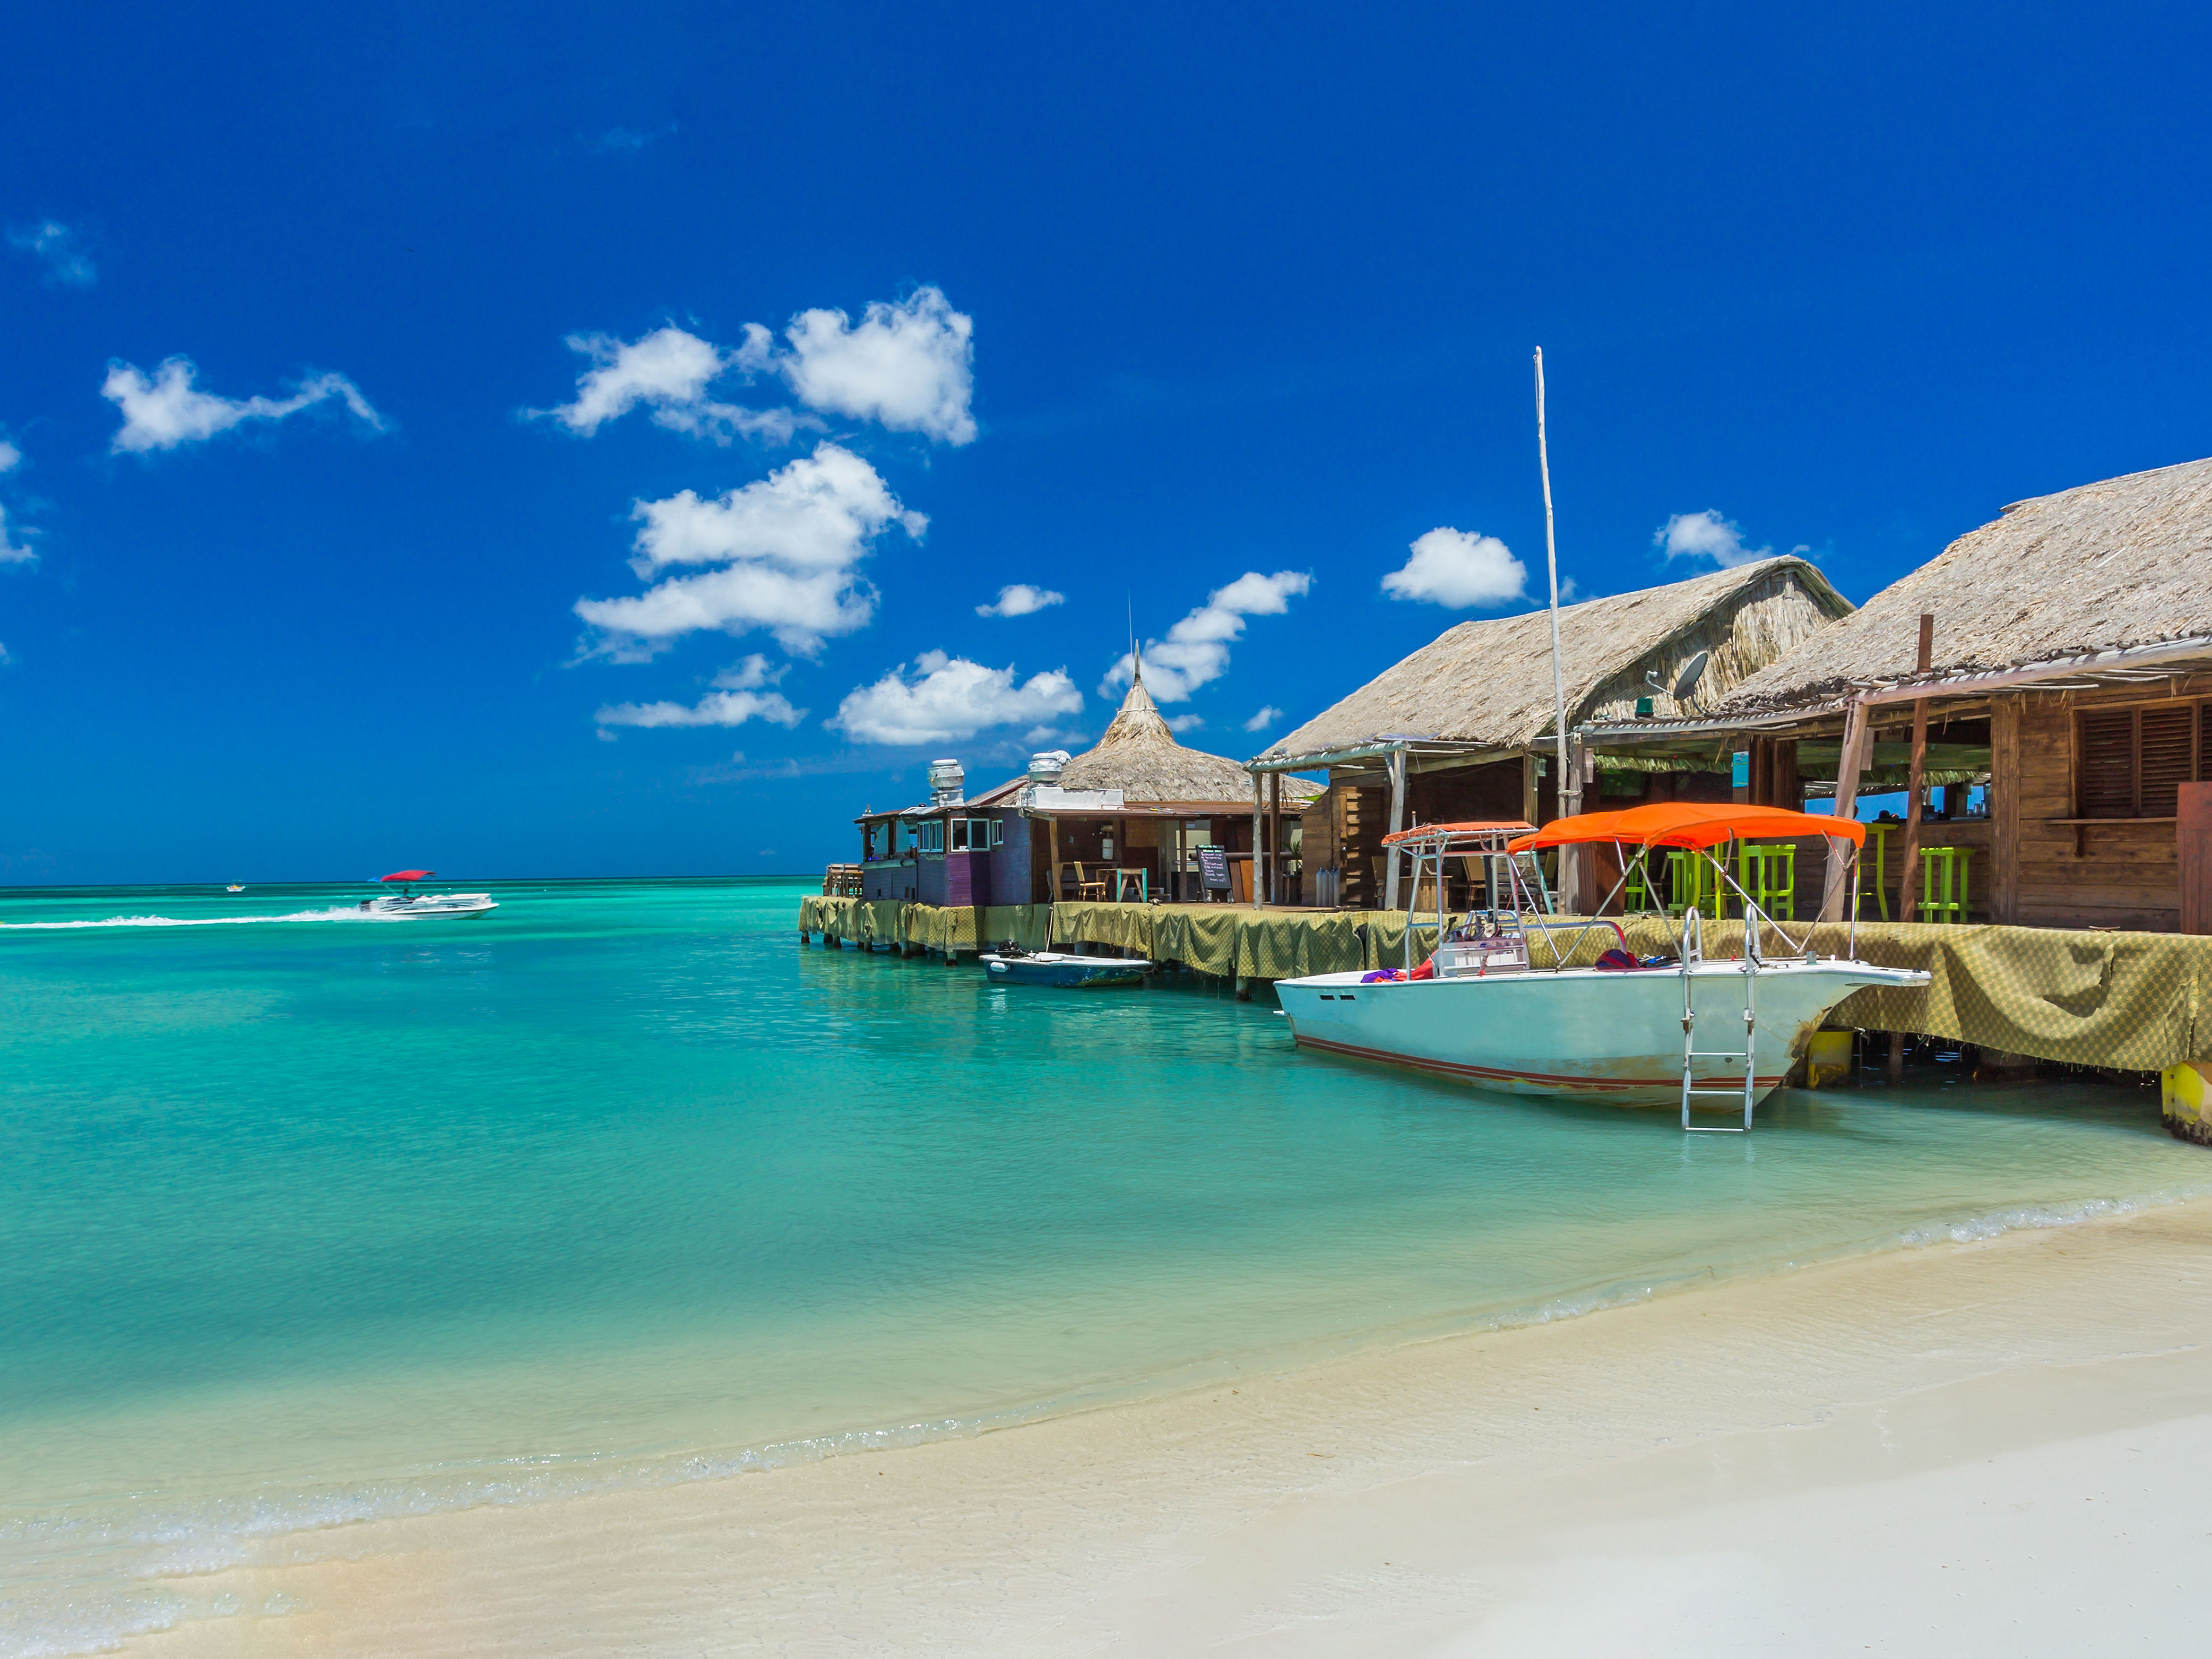 Beach at Aruba island, Netherlands Antilles, Caribbean